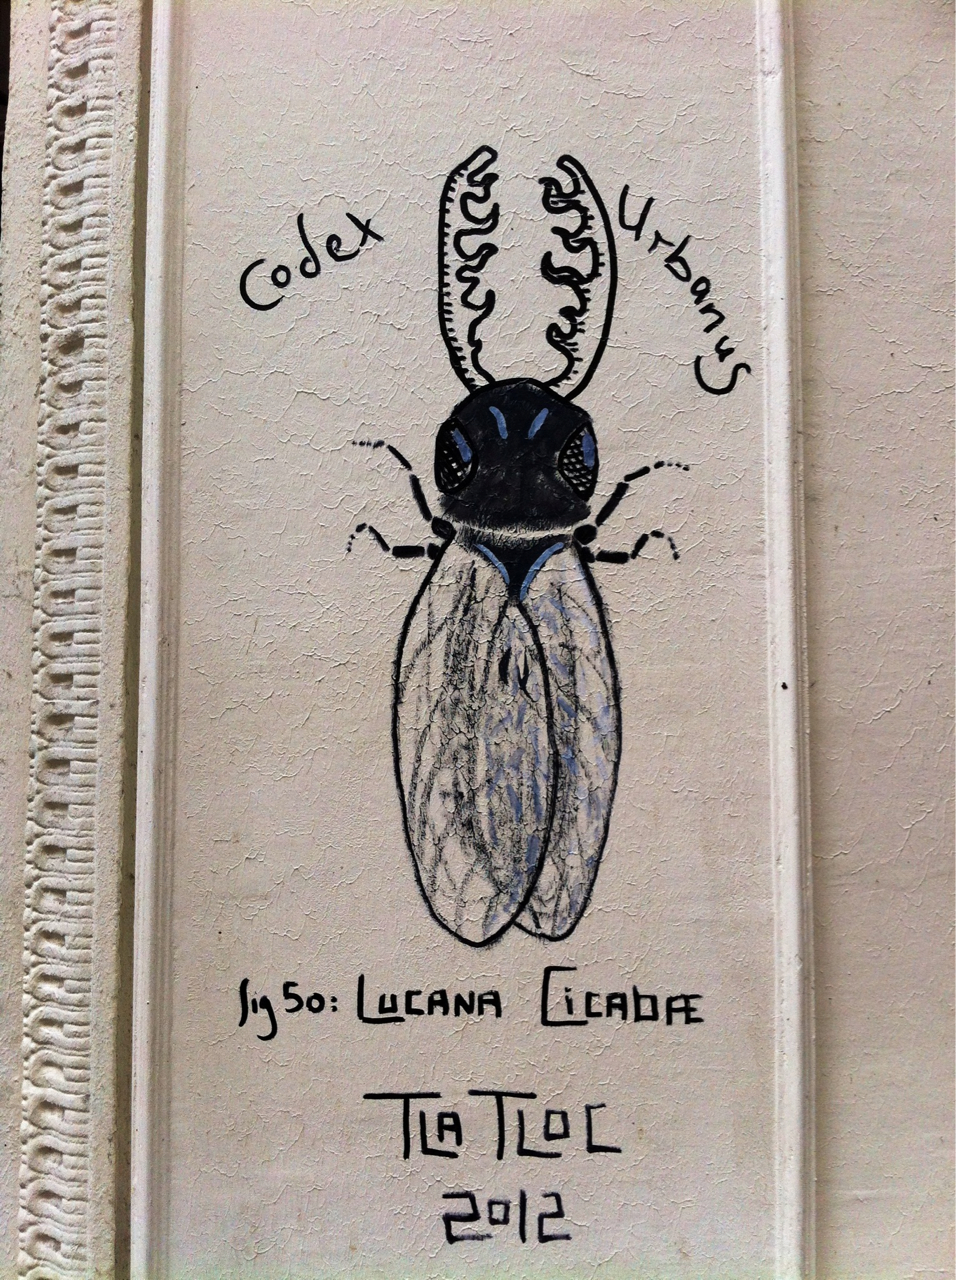 Lucana Cicadæ by Tlatloc